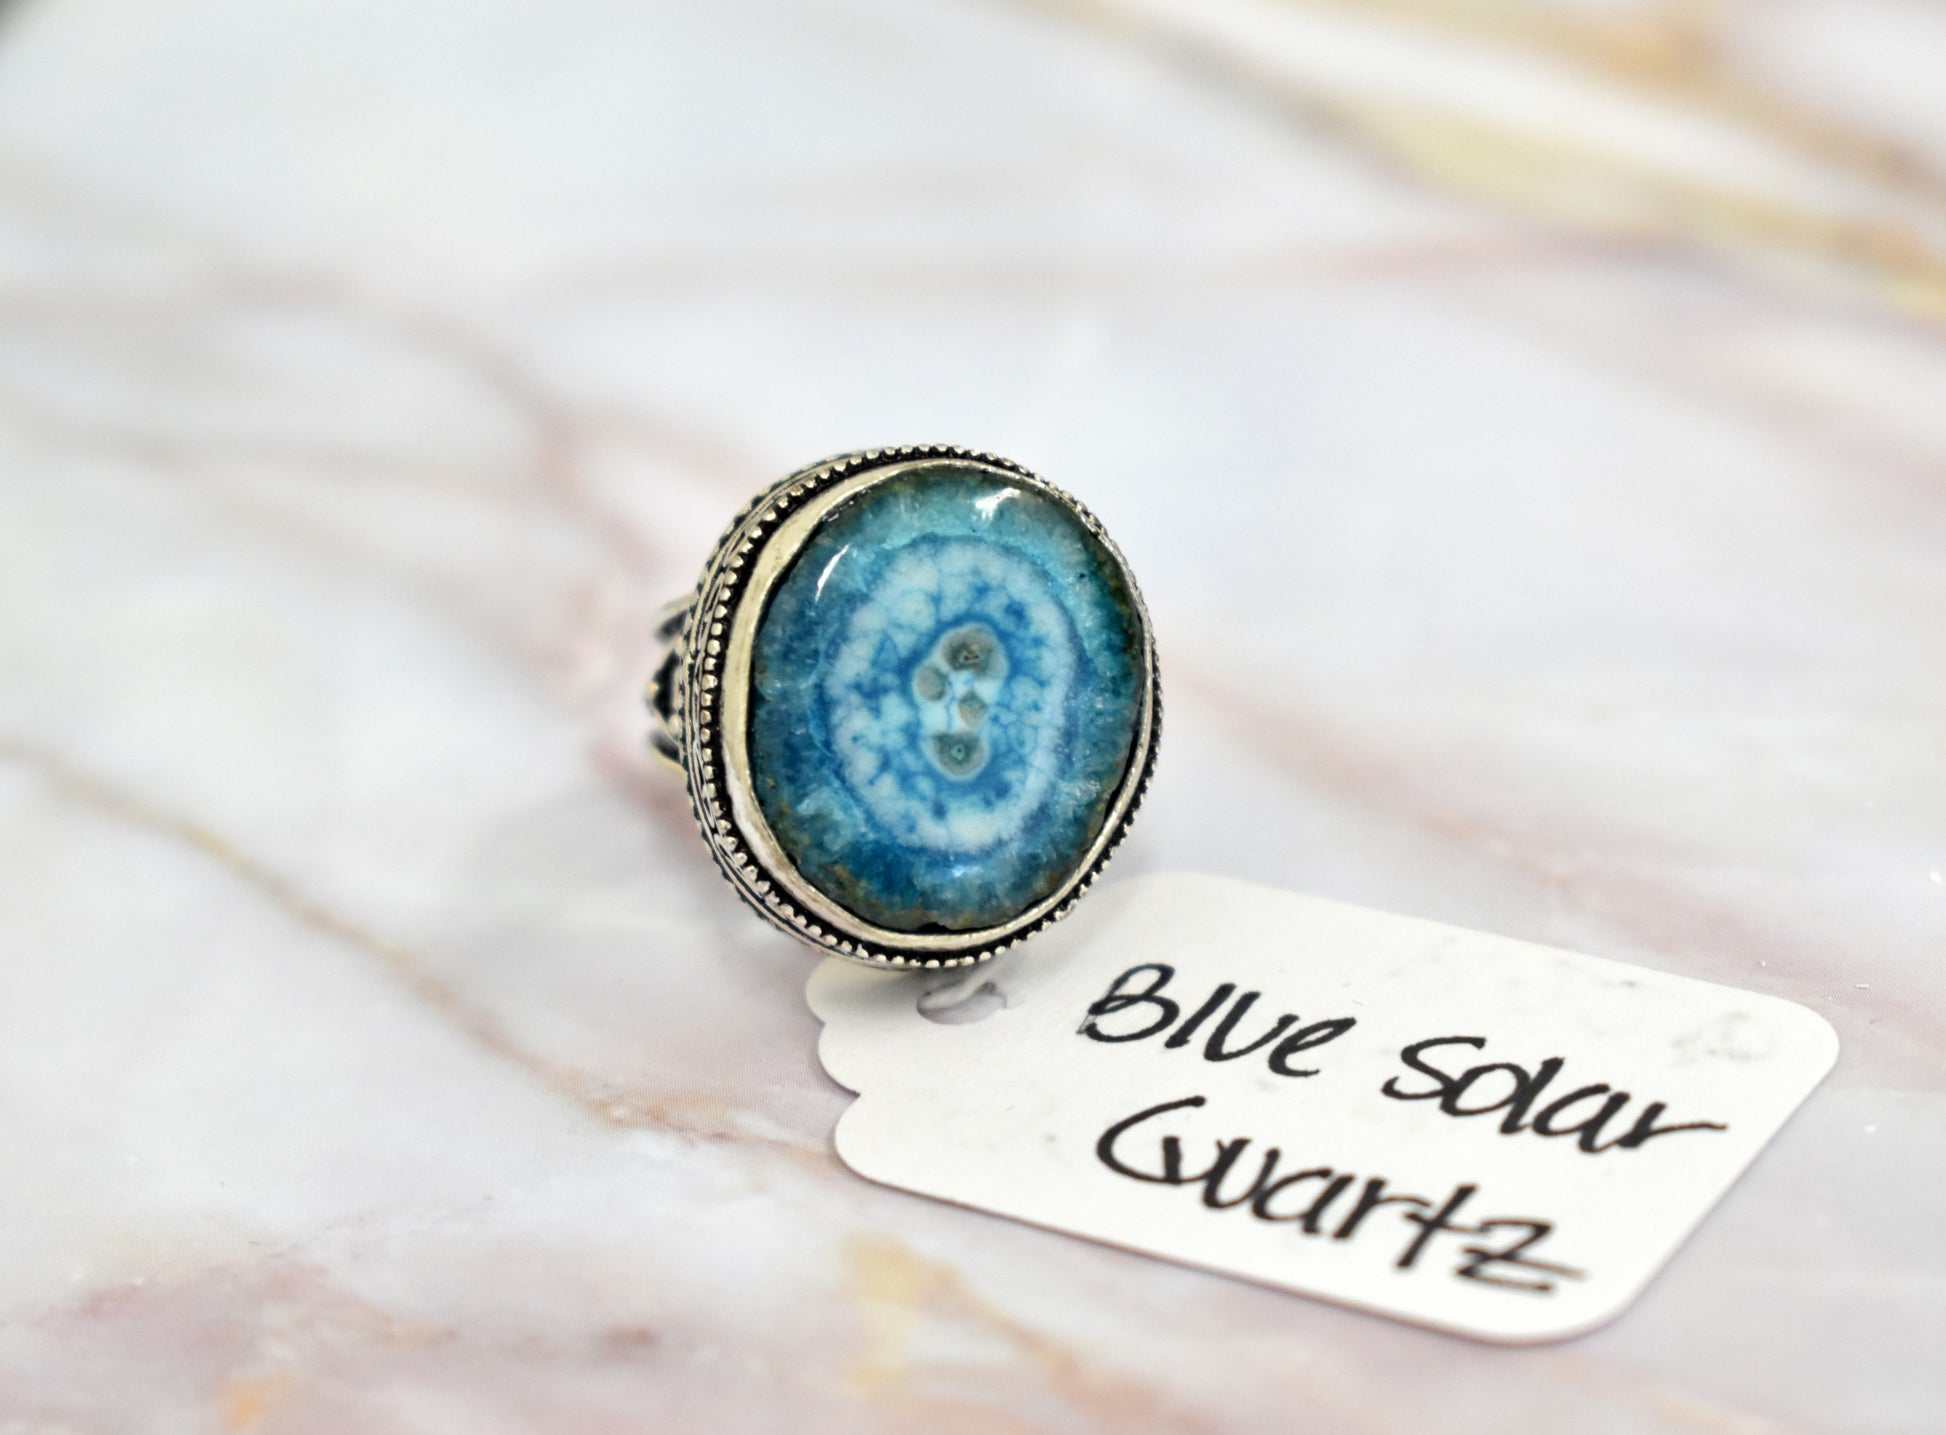 stones-of-transformation - Blue Solar Quartz Ring (Size 8) - Stones of Transformation - 